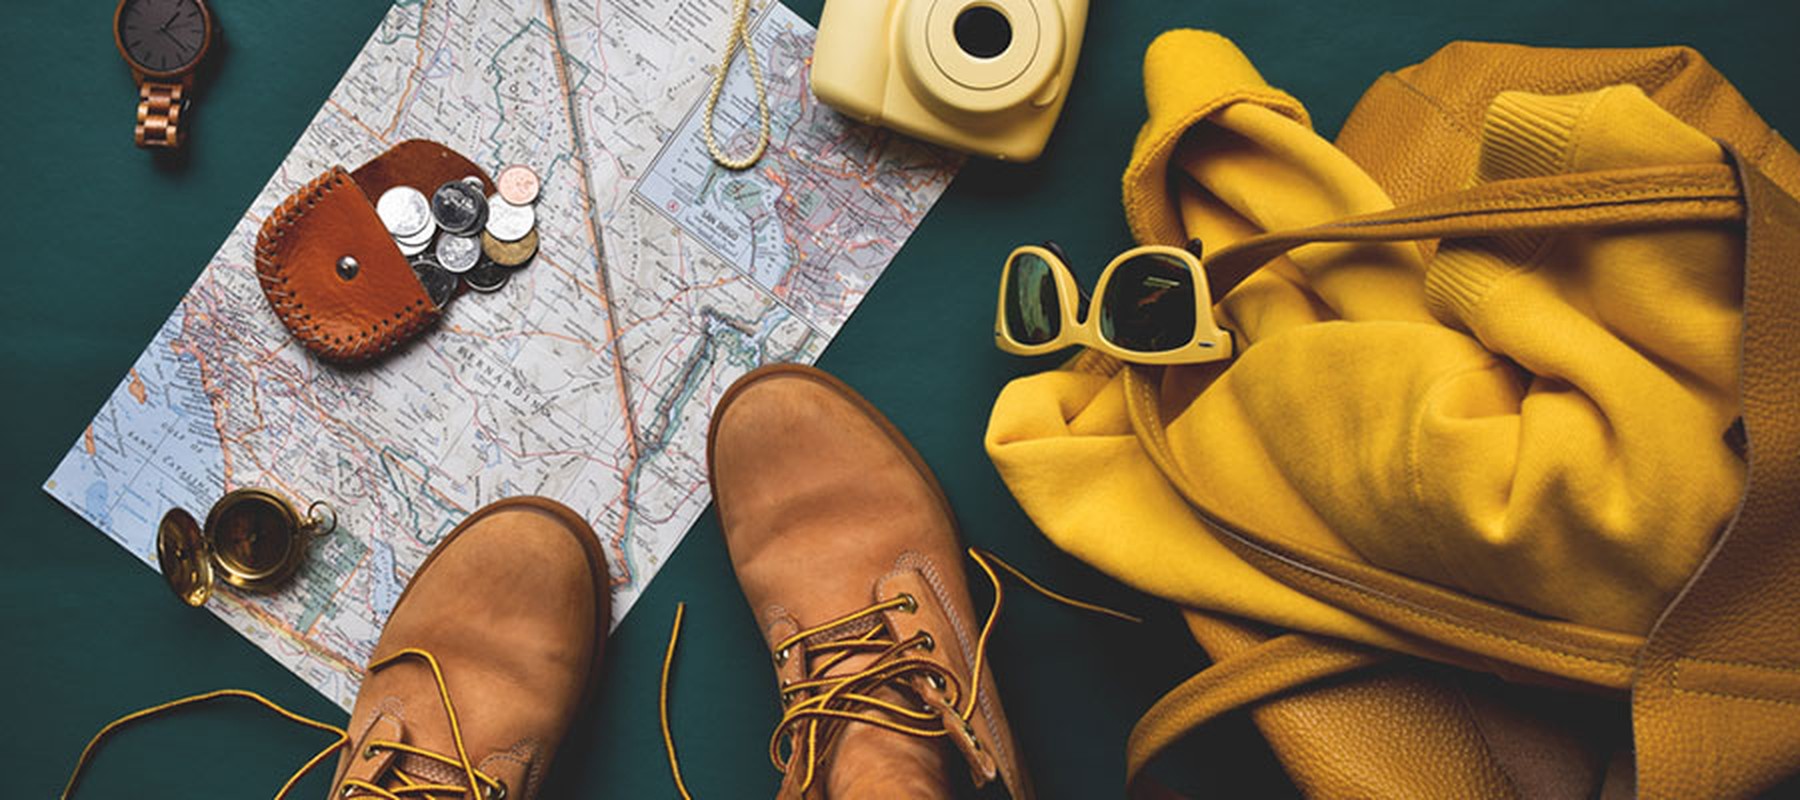 Accesorios de viaje: gafas, chaqueta, cámara, mapa